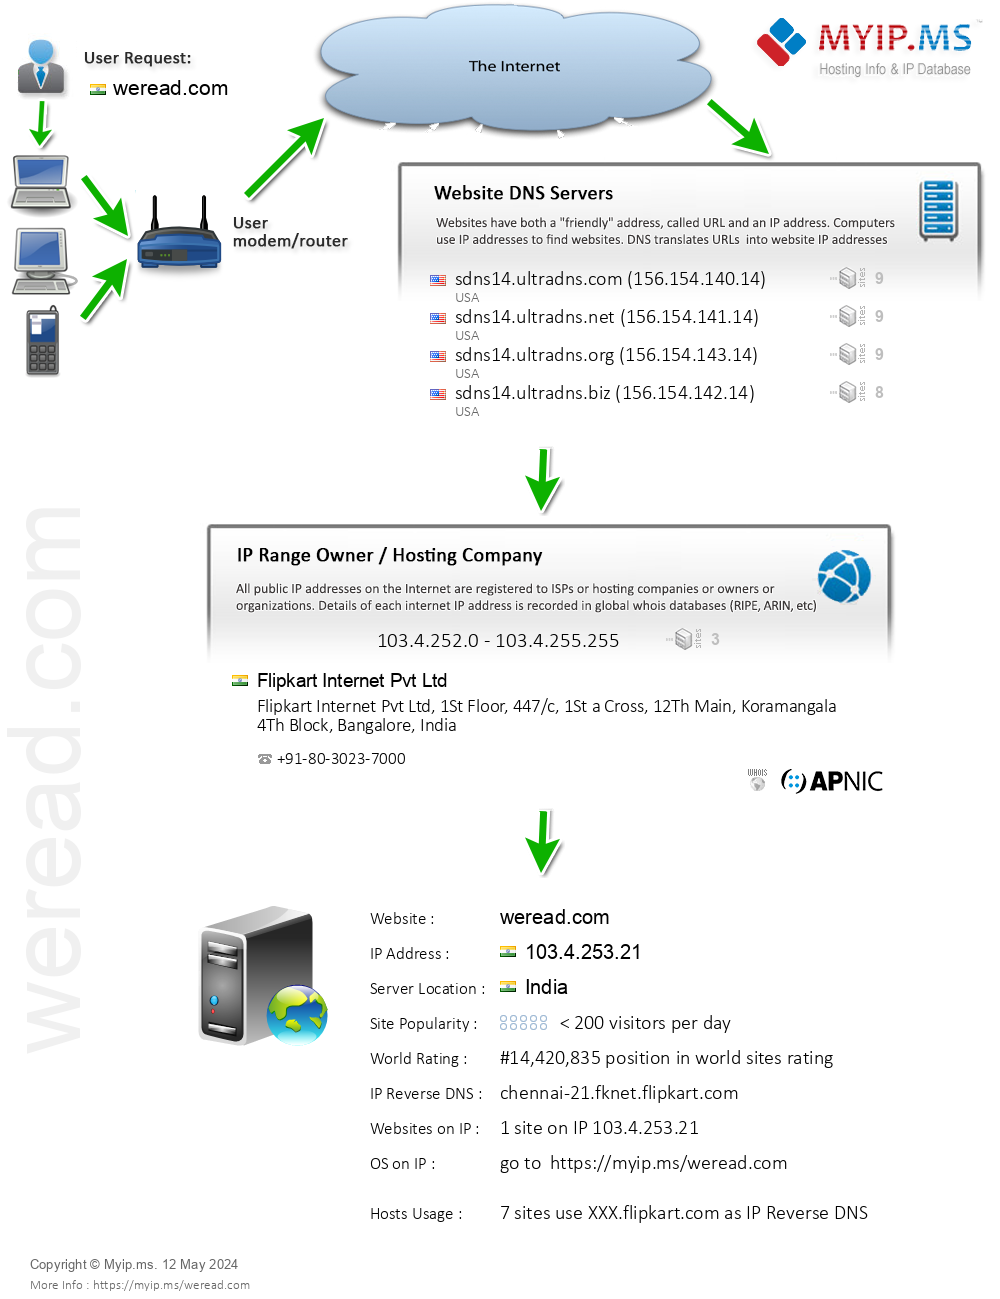 Weread.com - Website Hosting Visual IP Diagram